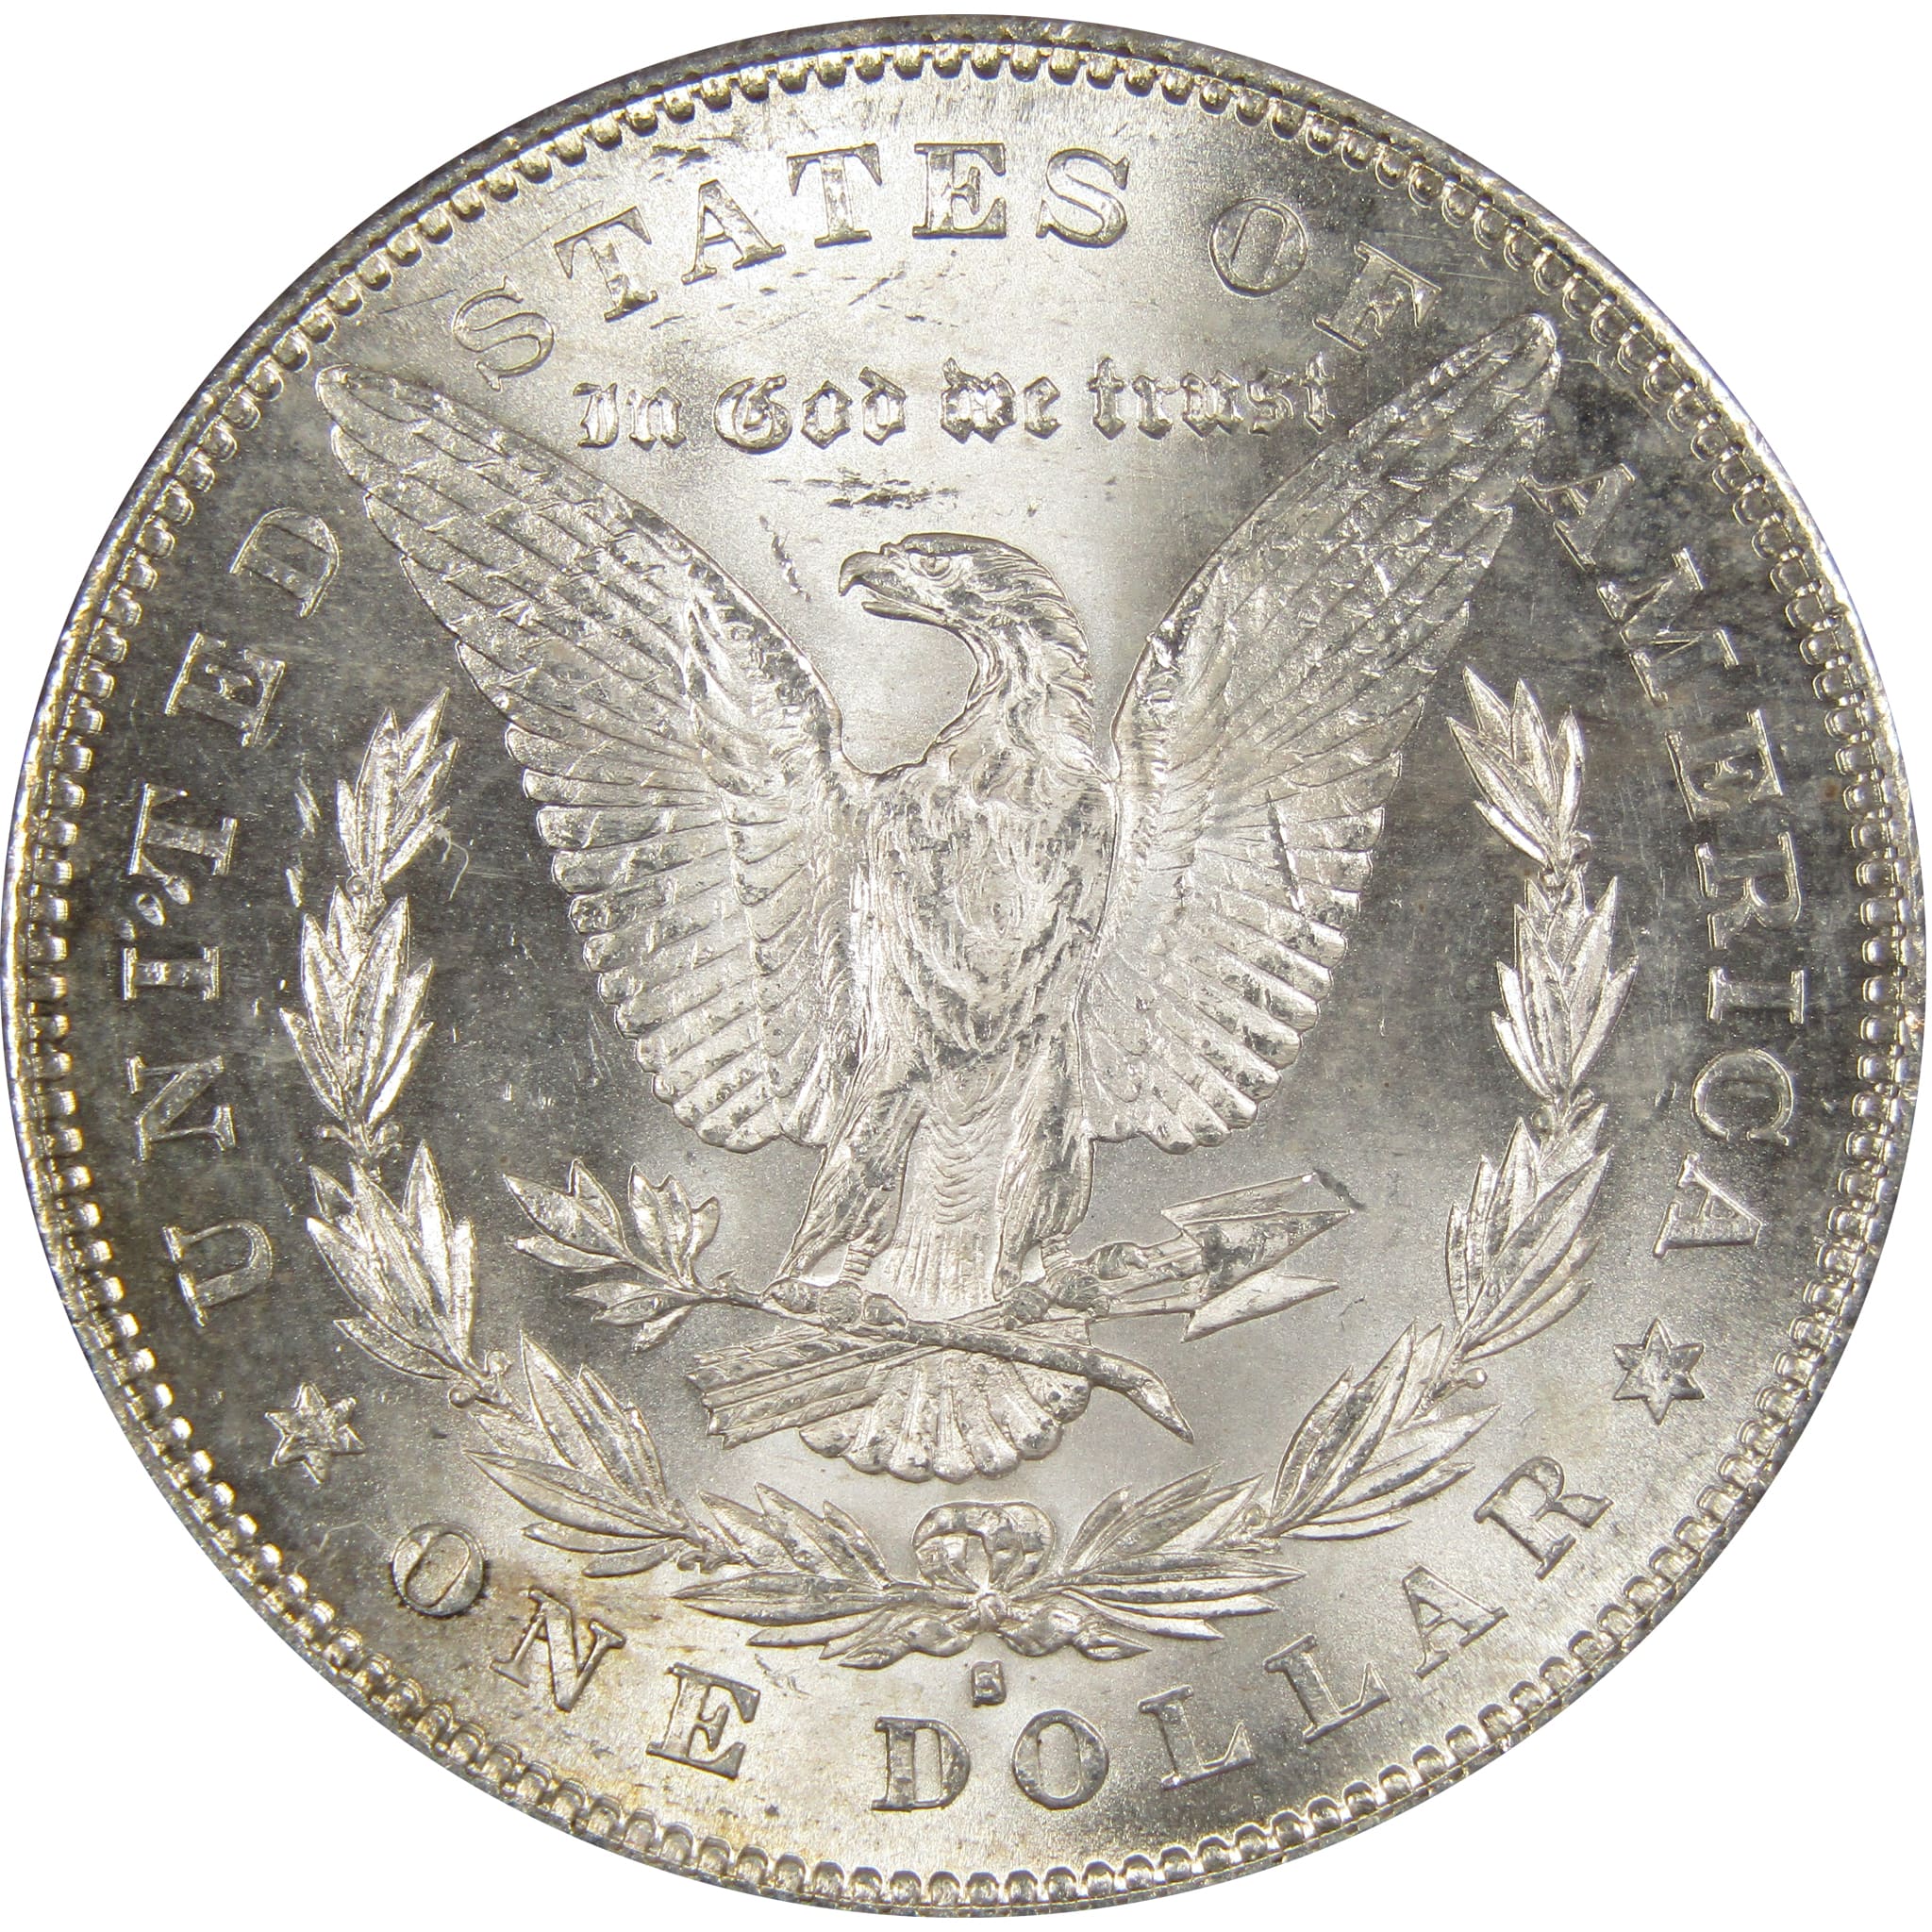 1878 S Morgan Dollar BU Uncirculated Mint State 90% Silver SKU:IPC7495 - Morgan coin - Morgan silver dollar - Morgan silver dollar for sale - Profile Coins &amp; Collectibles